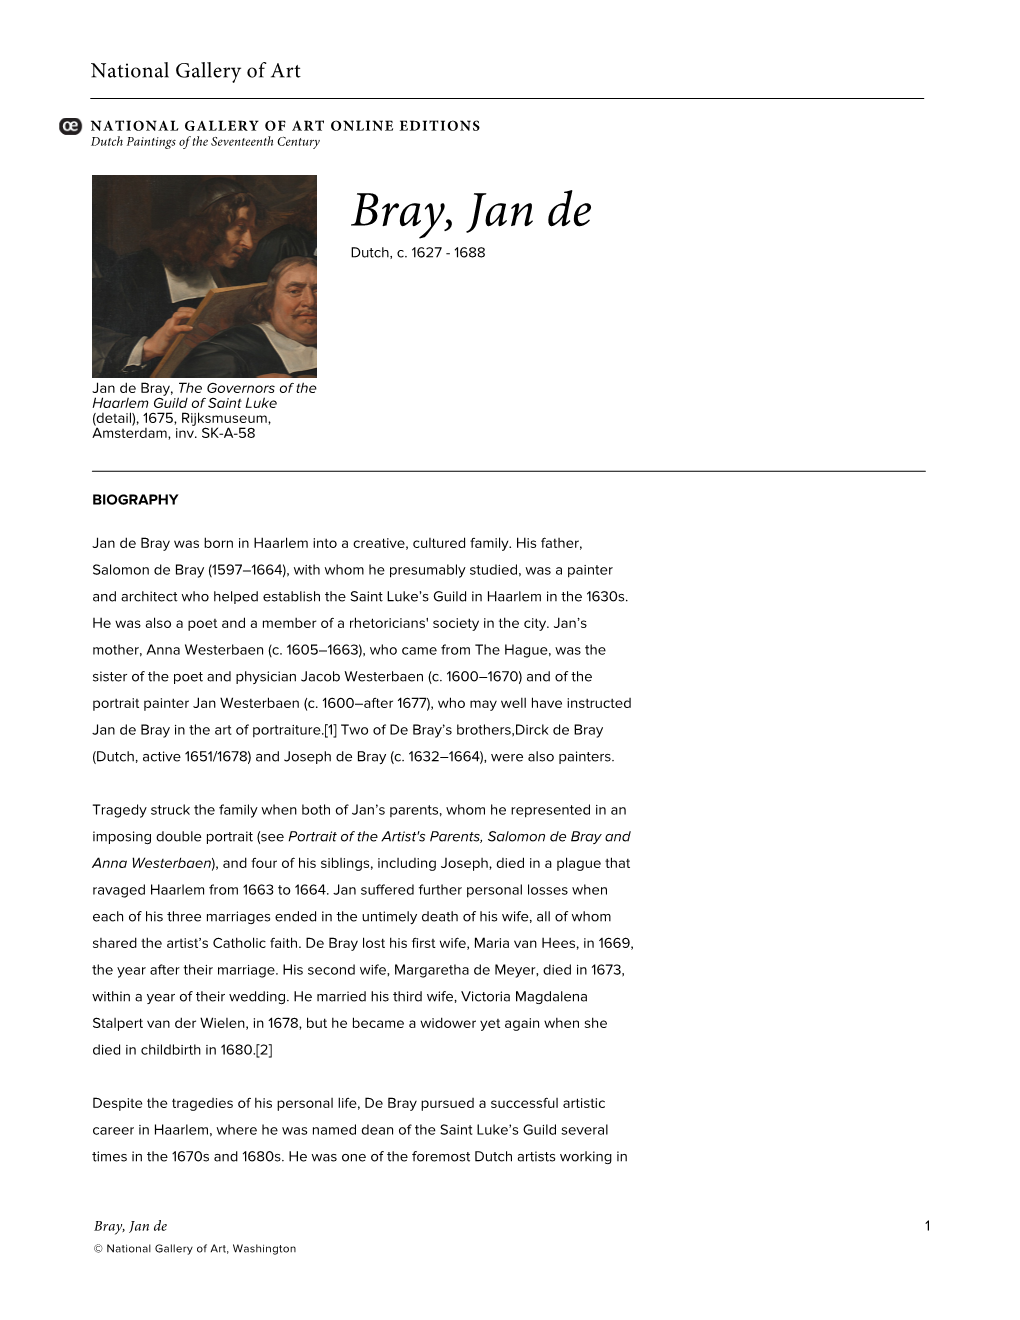 Bray, Jan De Dutch, C